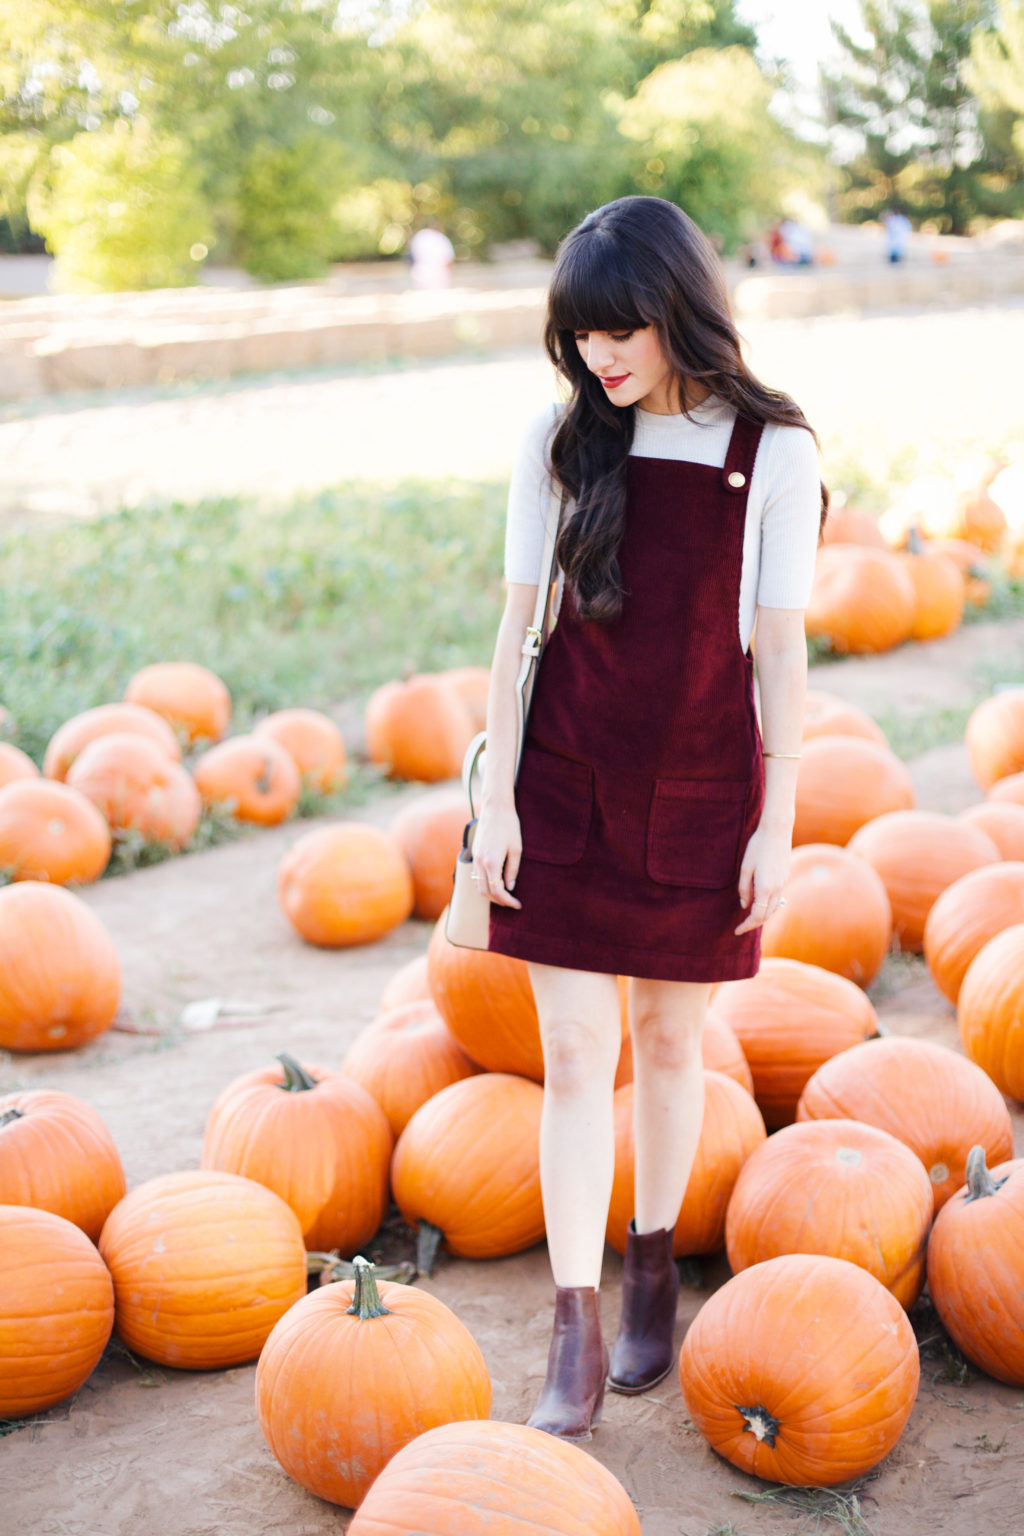 New Darlings - Overalls Dress - Clarks Boots - Fall Fashion - Pumpkin Picking